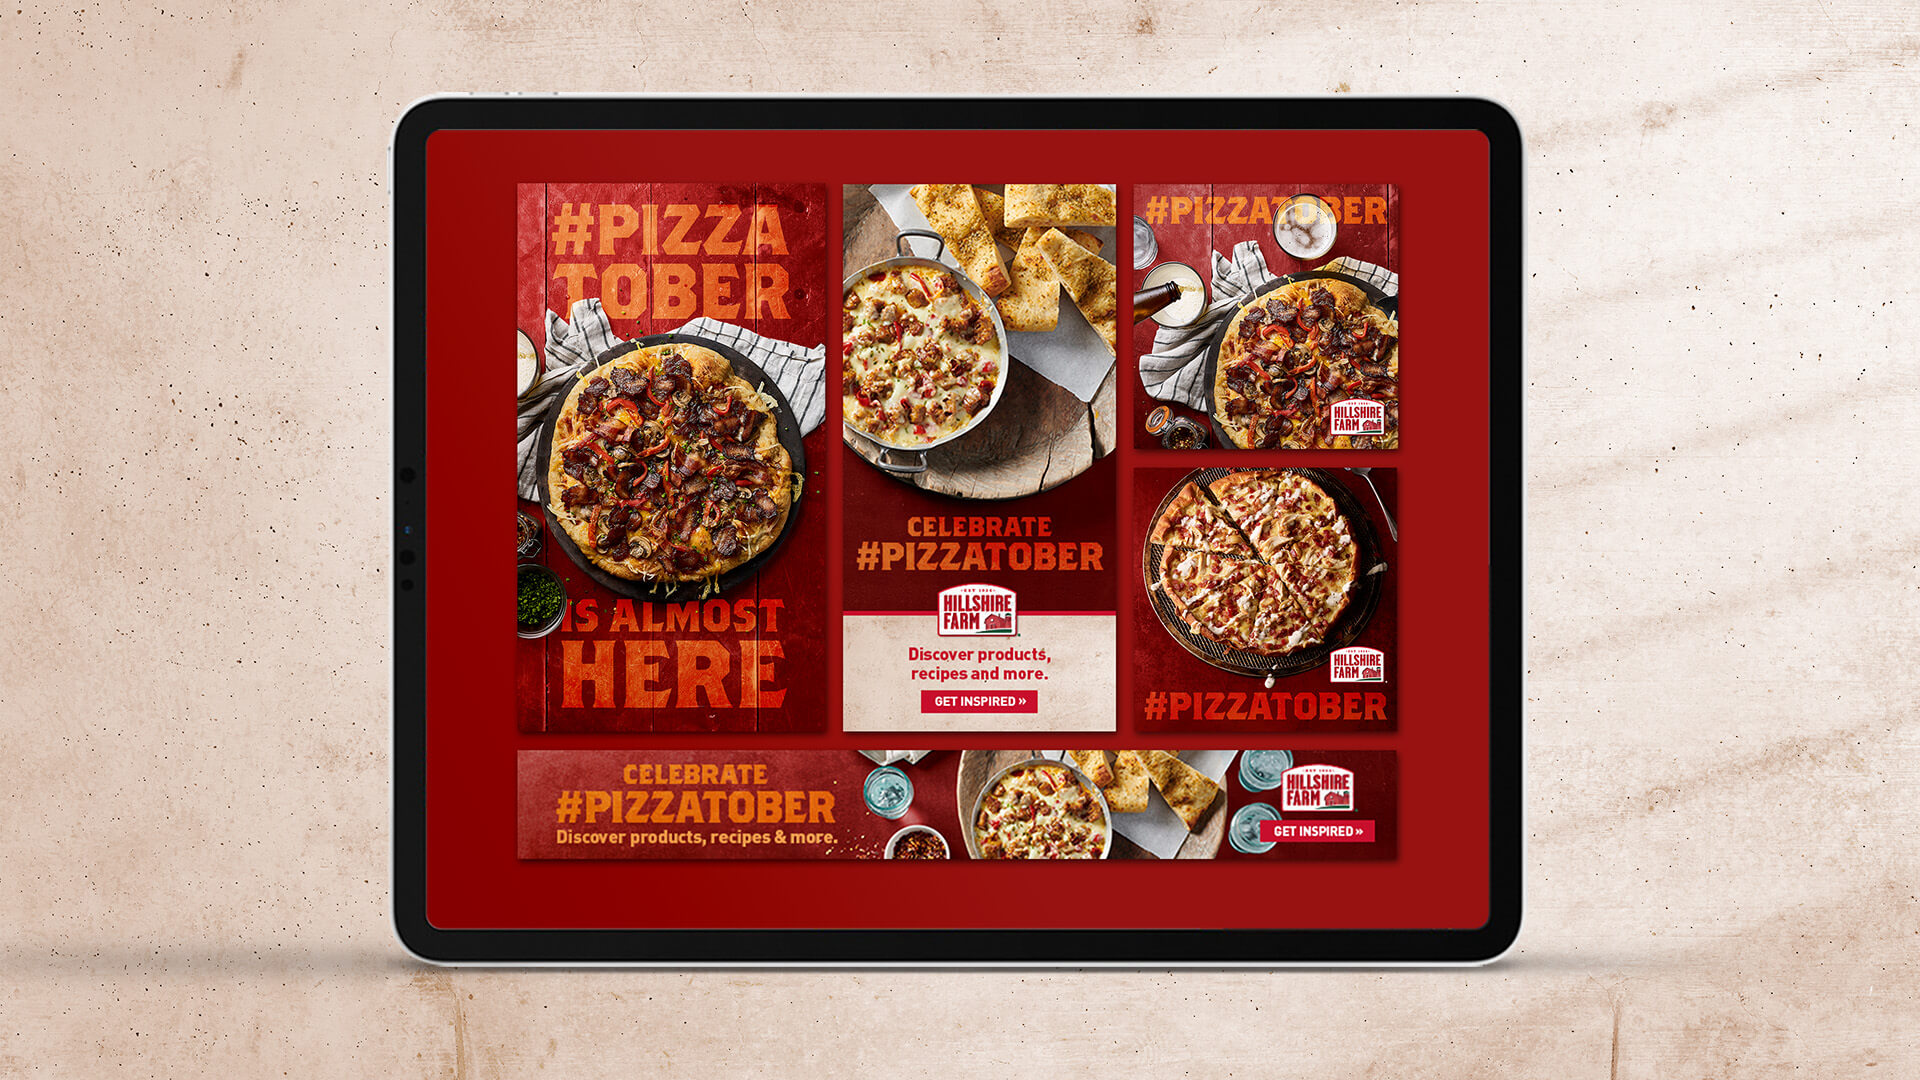 Tyson Pizzatober digital media on tablet screen.